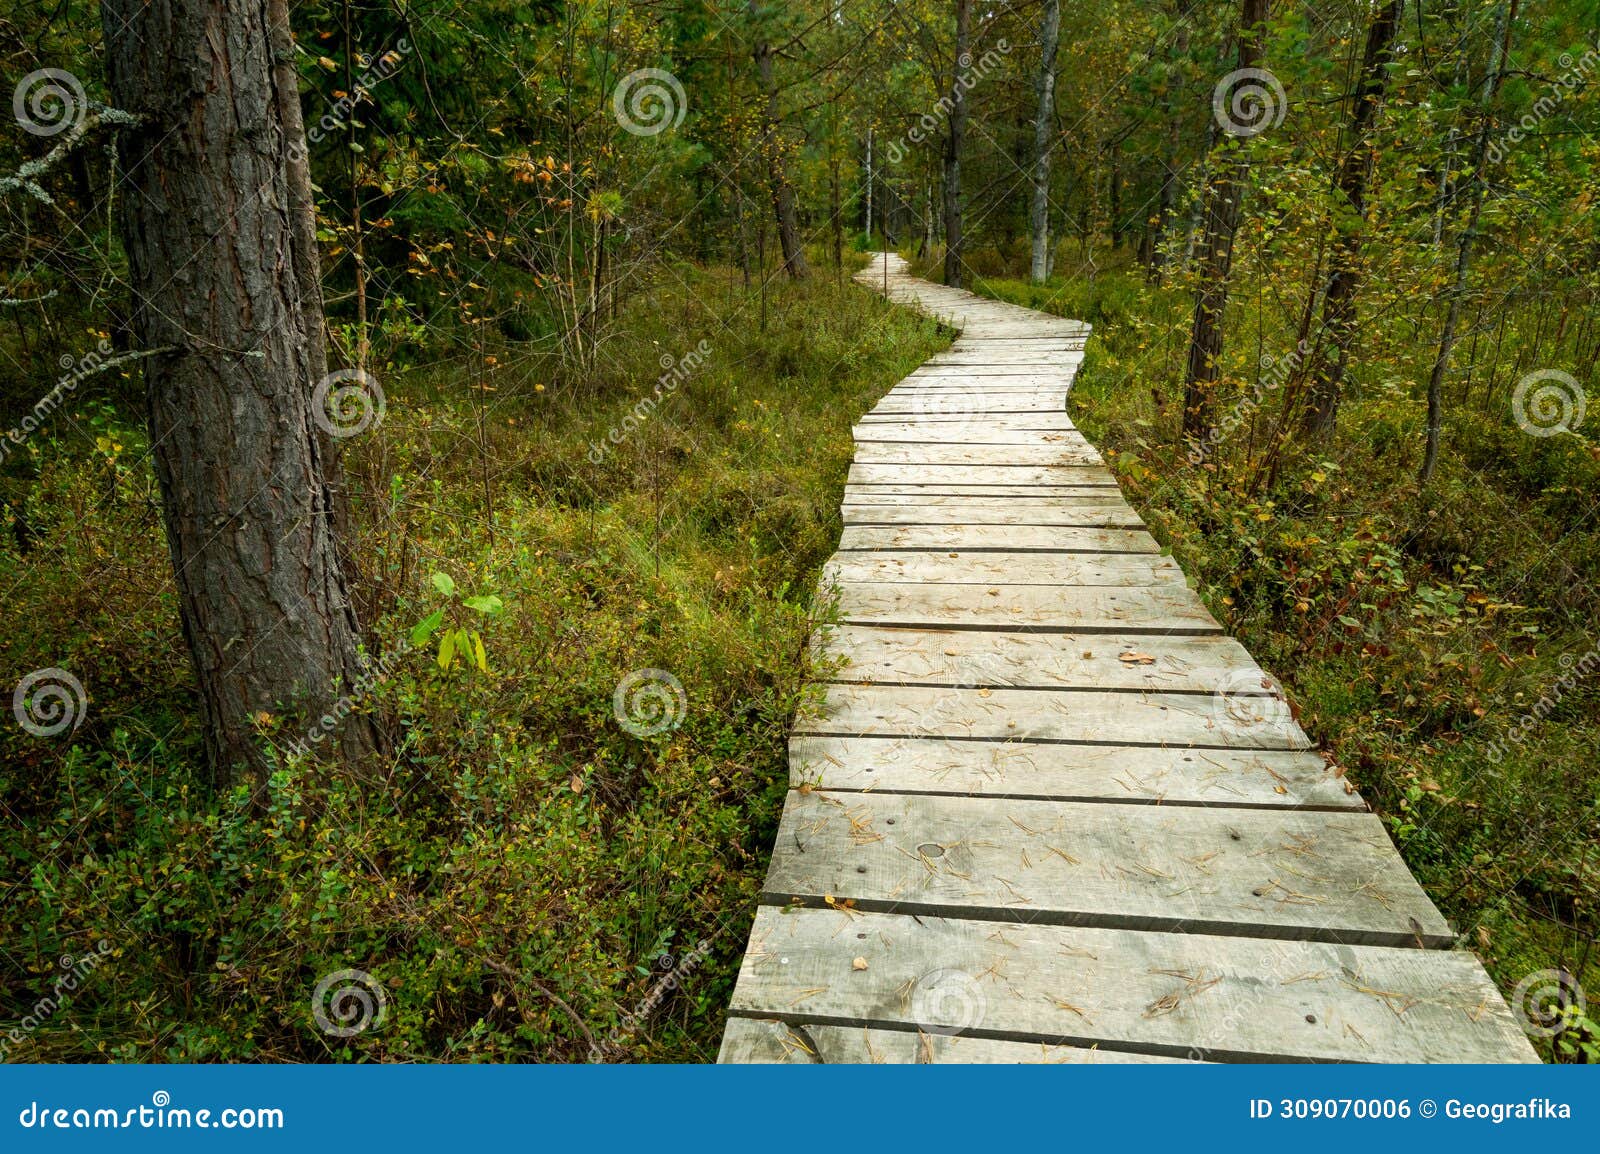 wooden path through a swampy forest peatland tarnawa